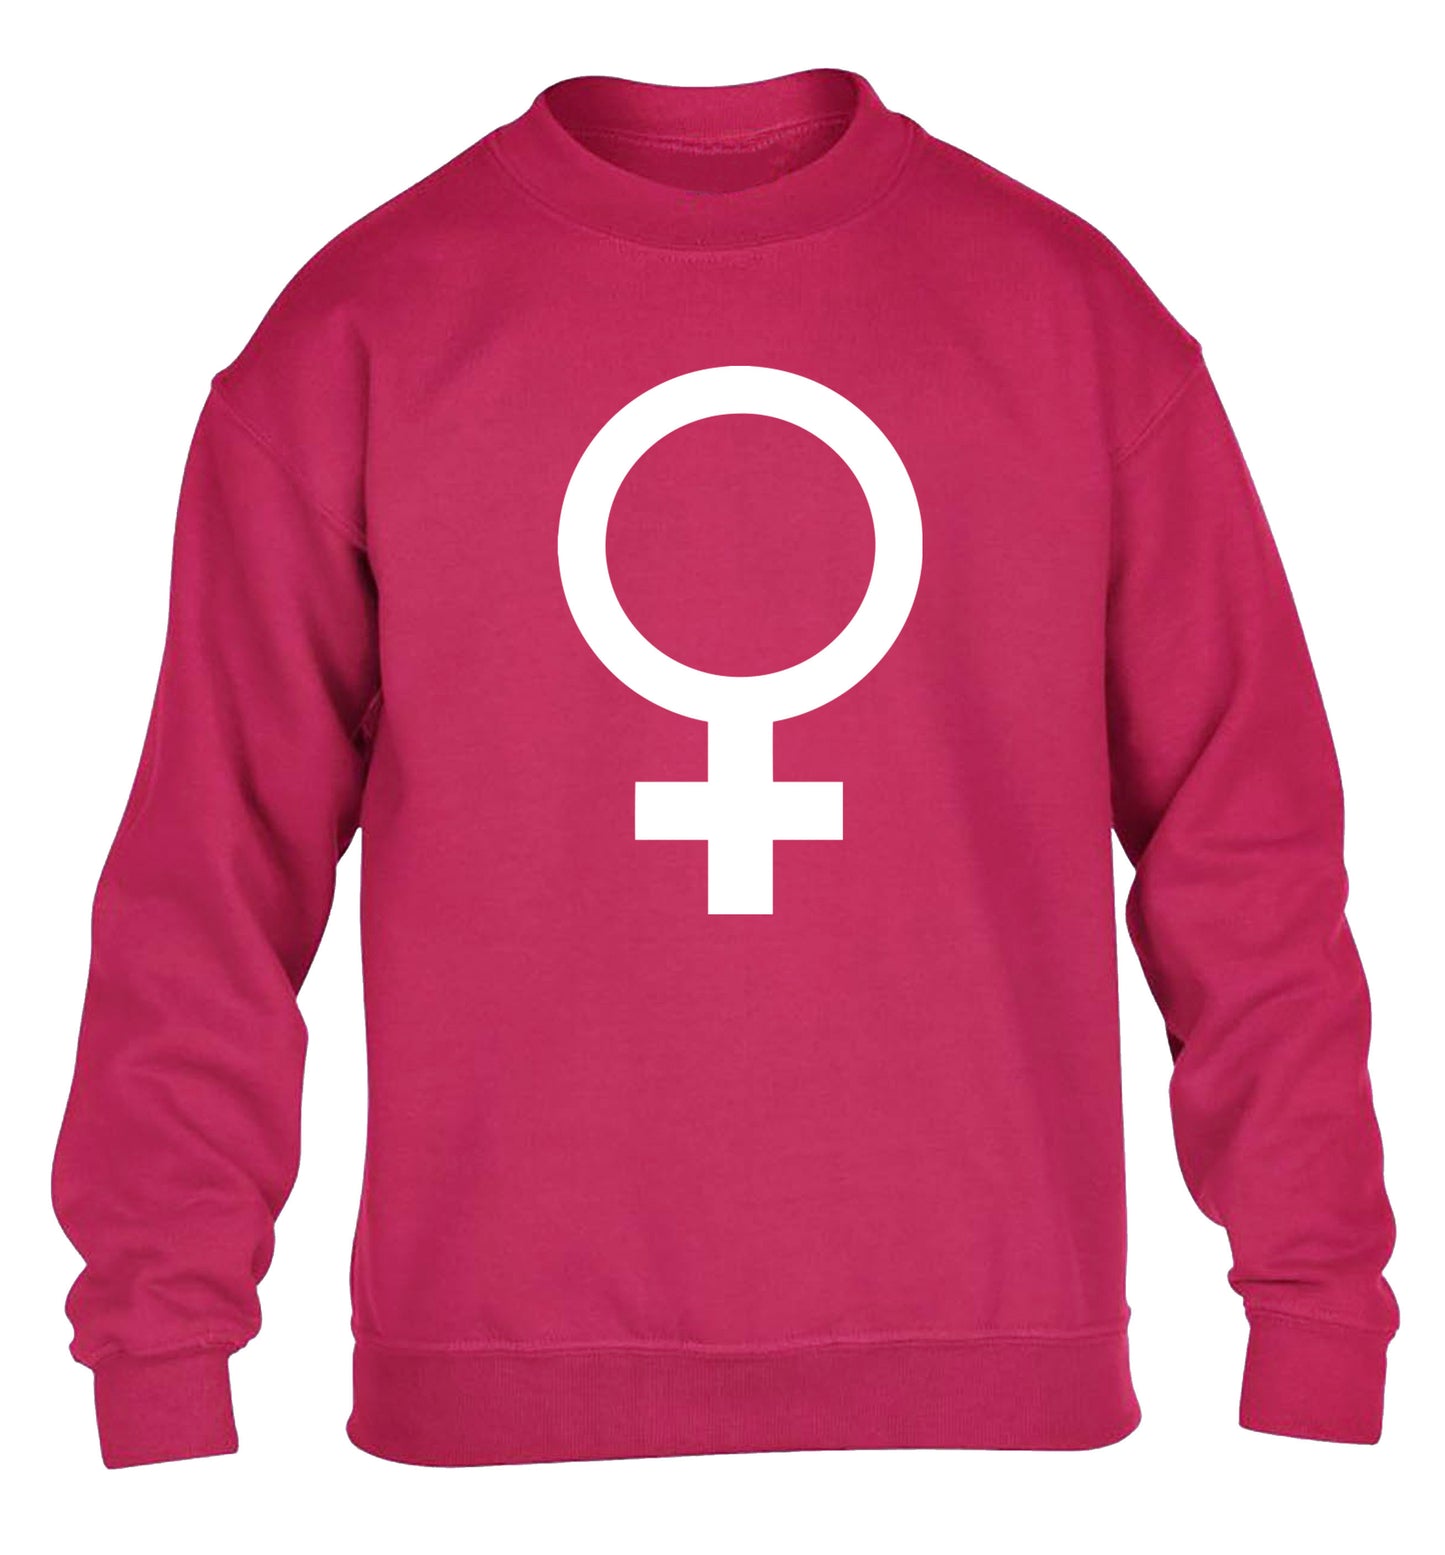 Female symbol large children's pink sweater 12-14 Years